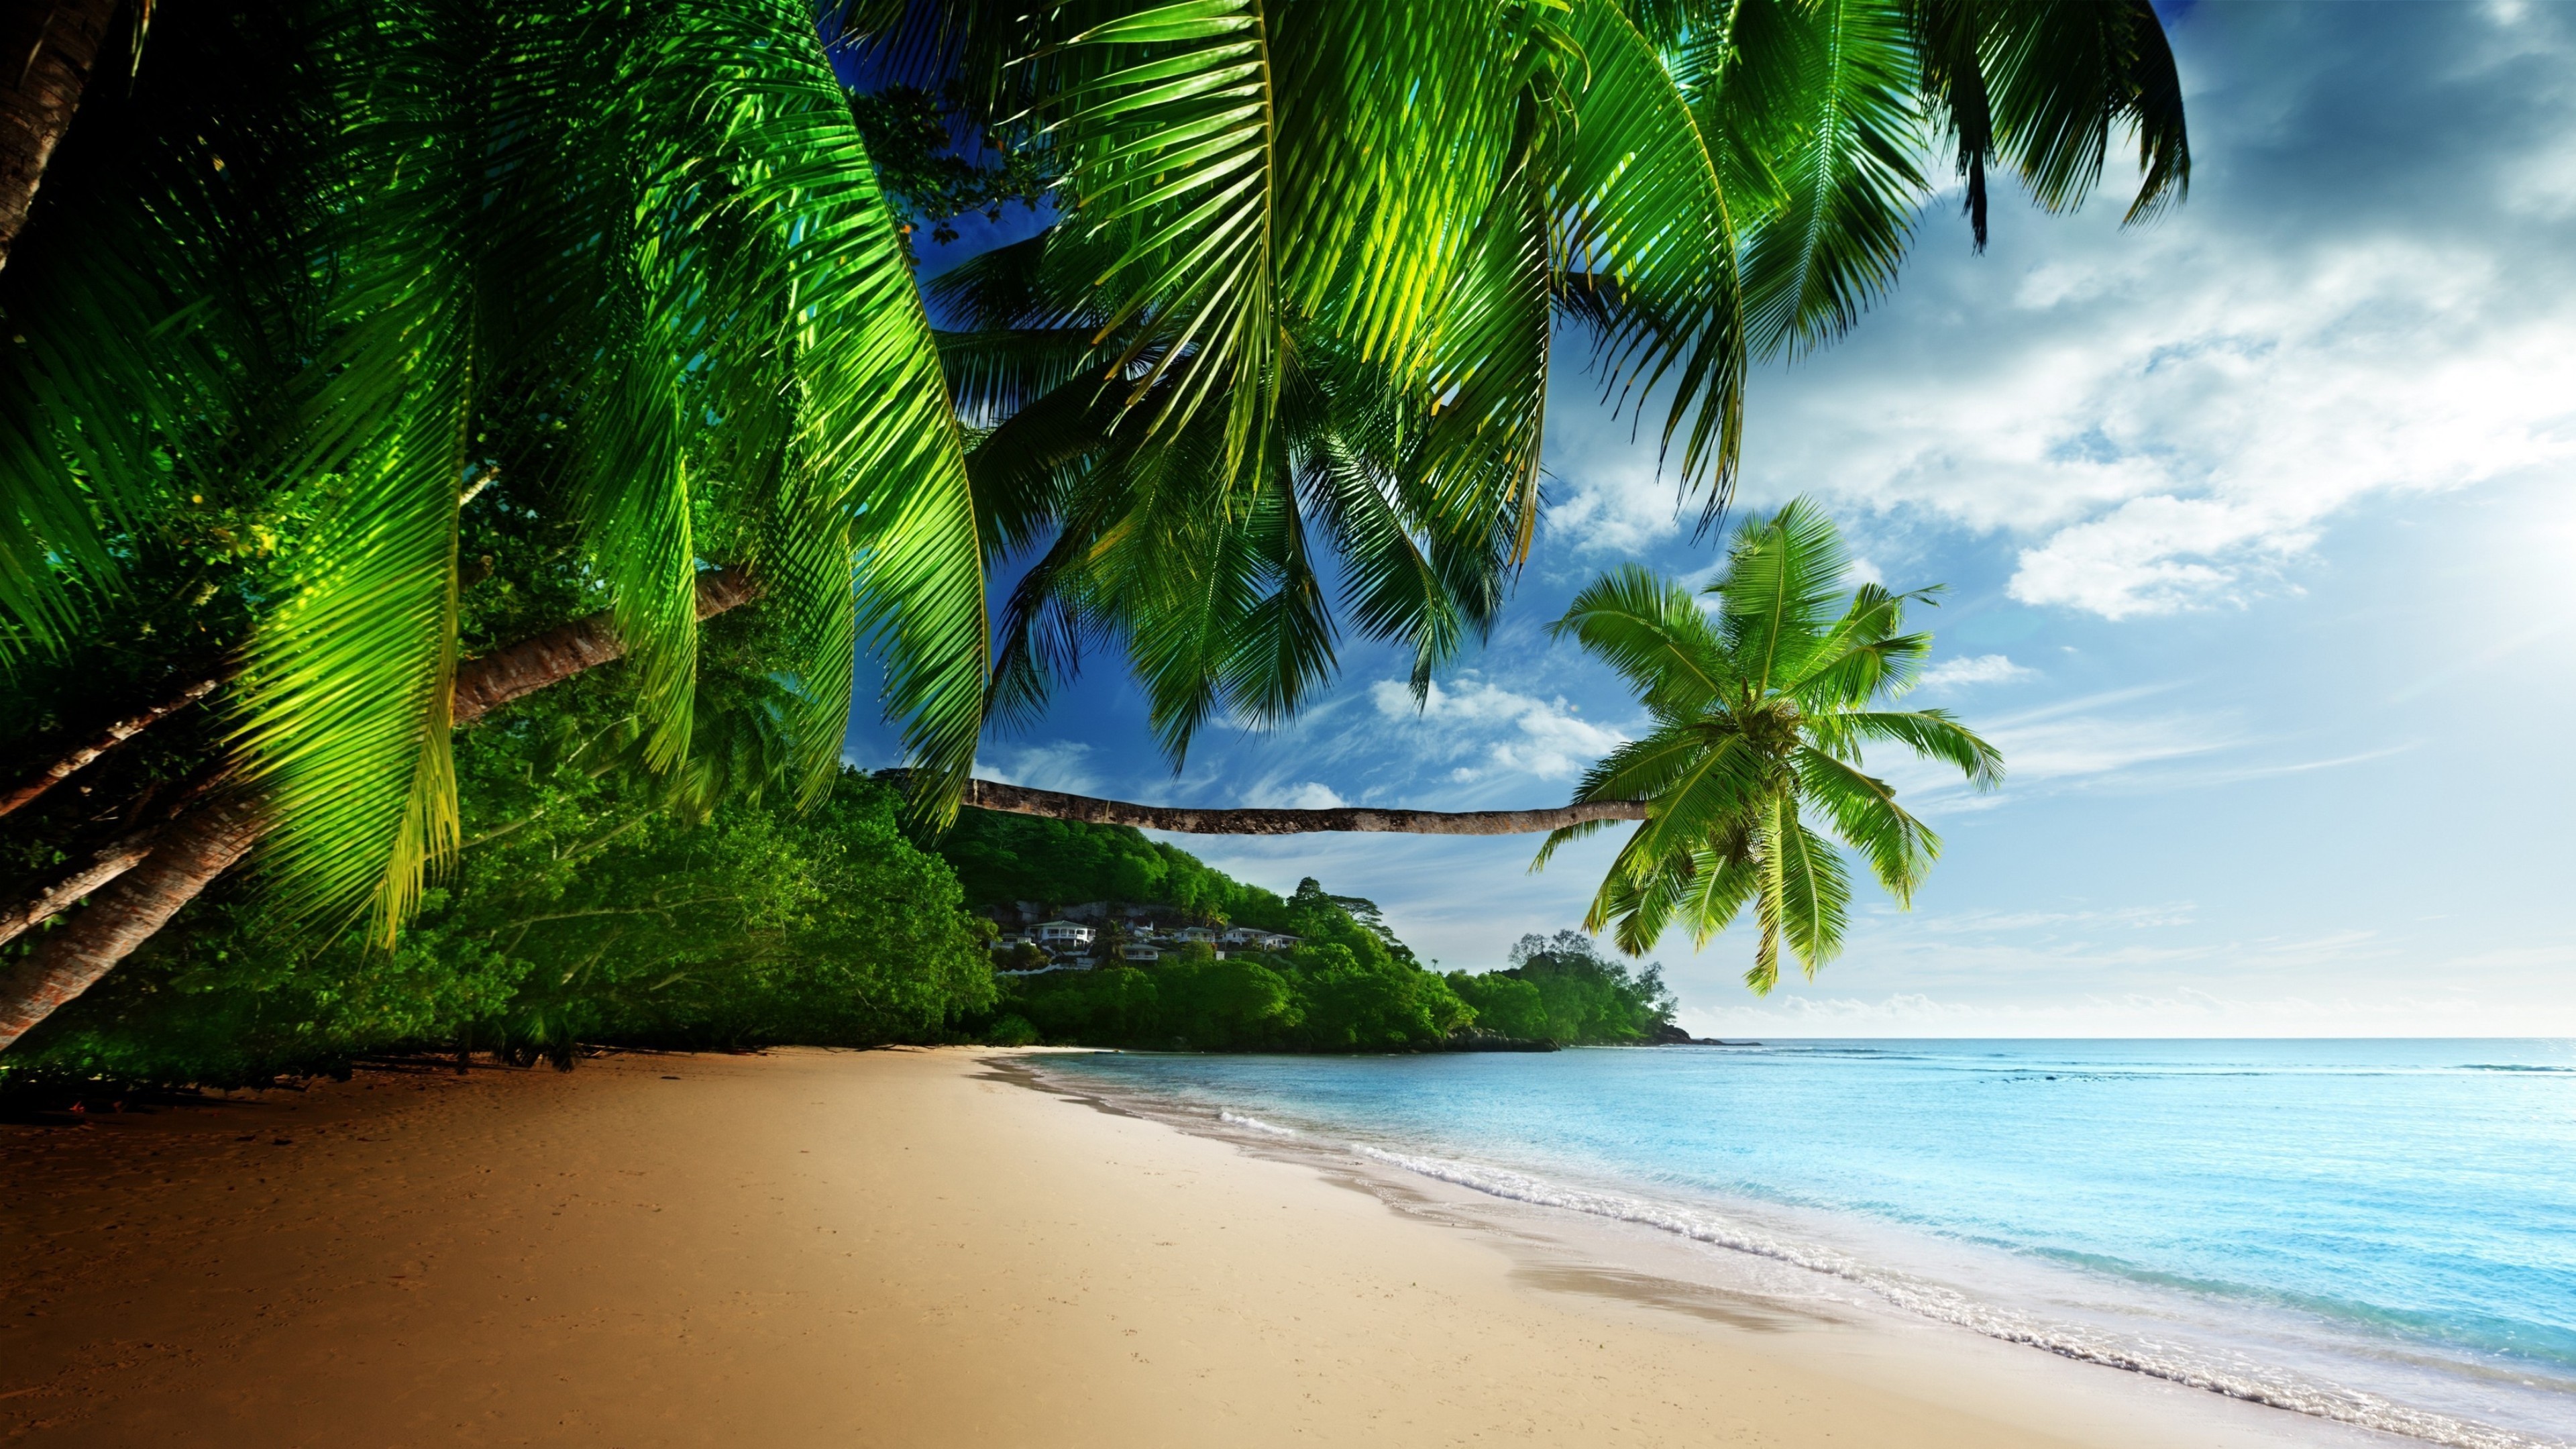 Seashore Beach Ocean And Sea 4k Ultra HD Wallpaper Background